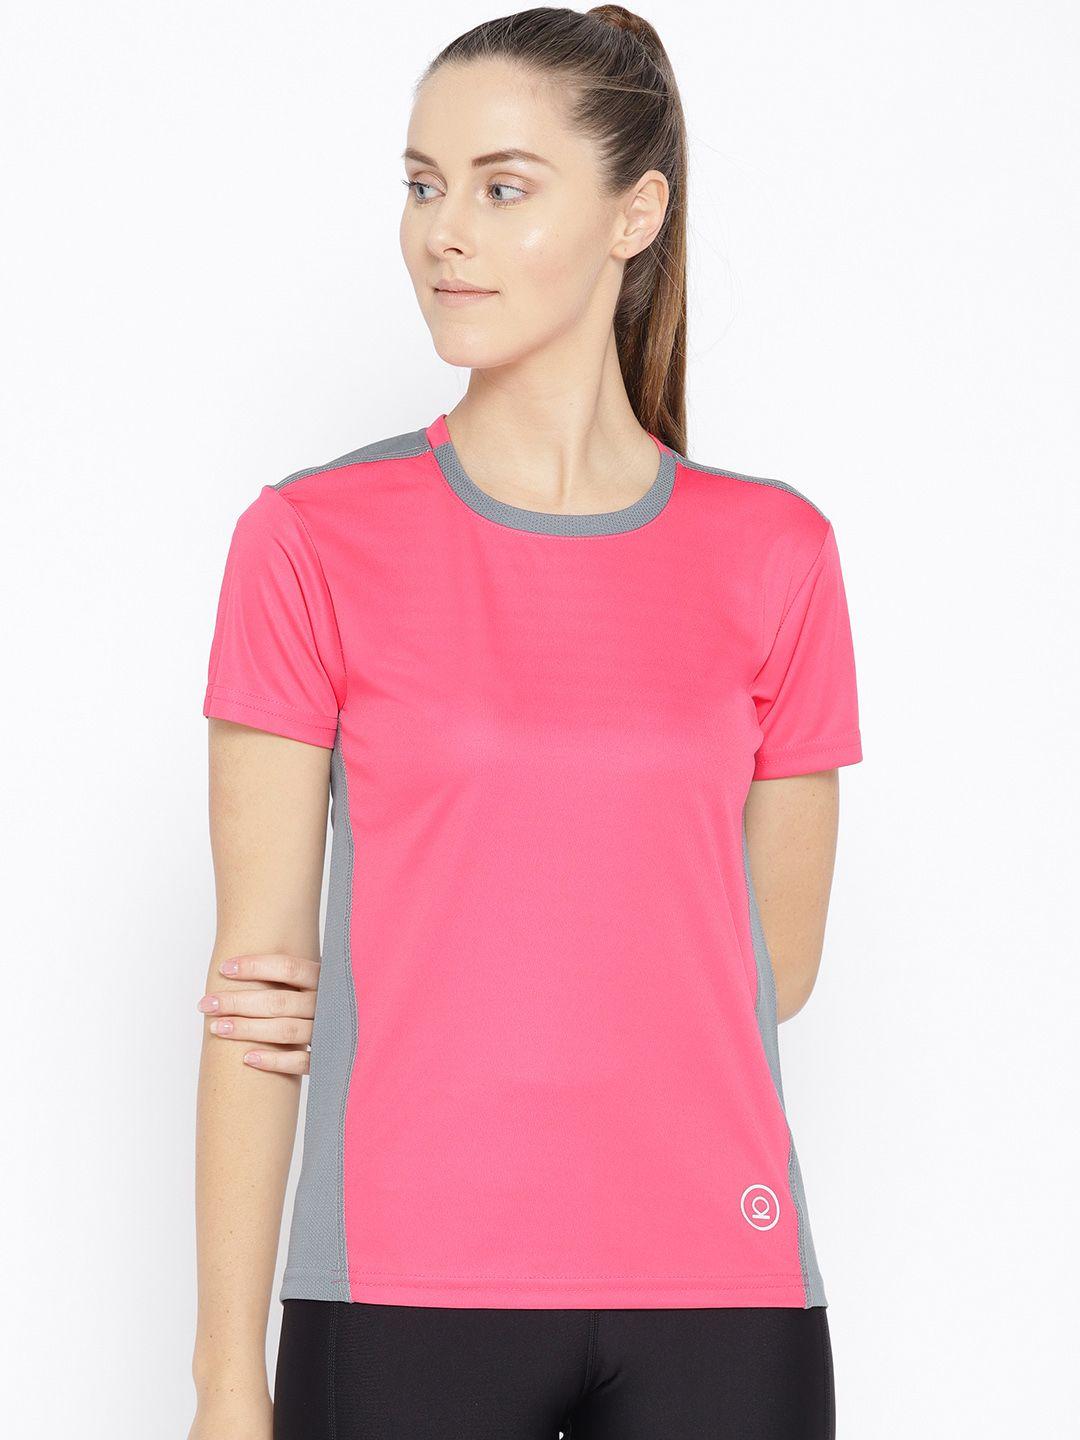 chkokko women pink solid round neck running t-shirt